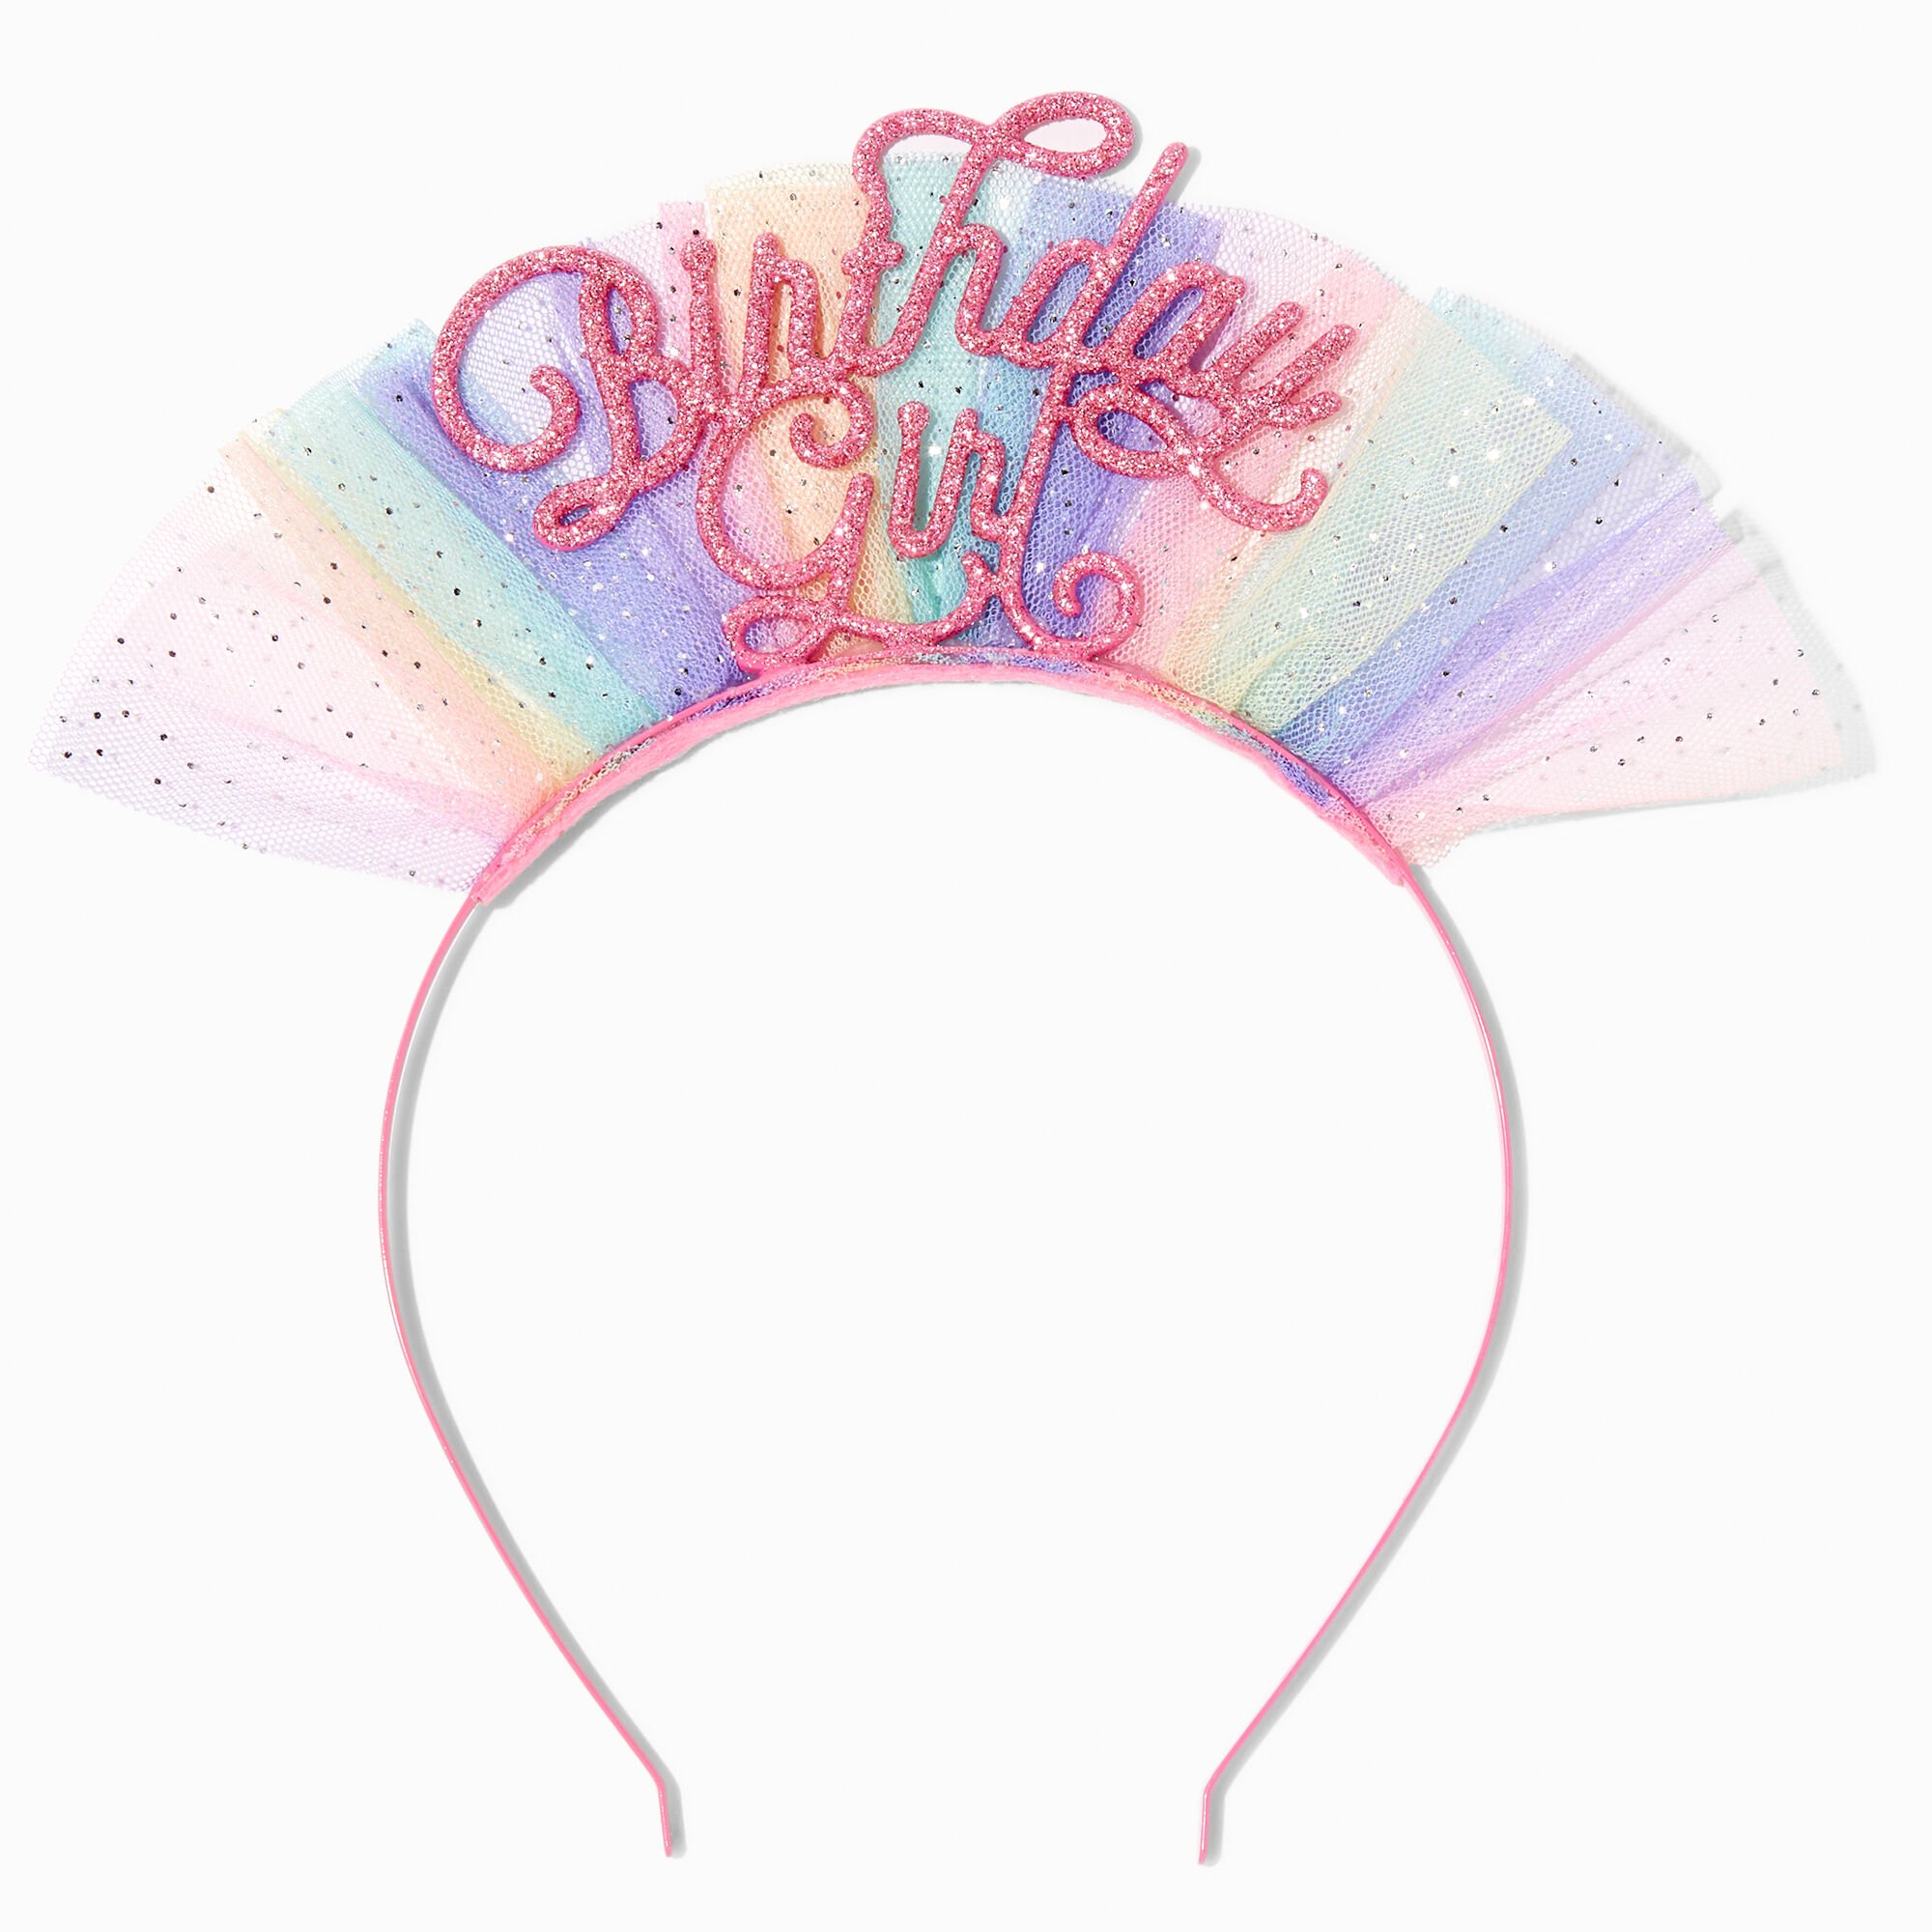 View Claires Birthday Girl Tulle Headband Rainbow information